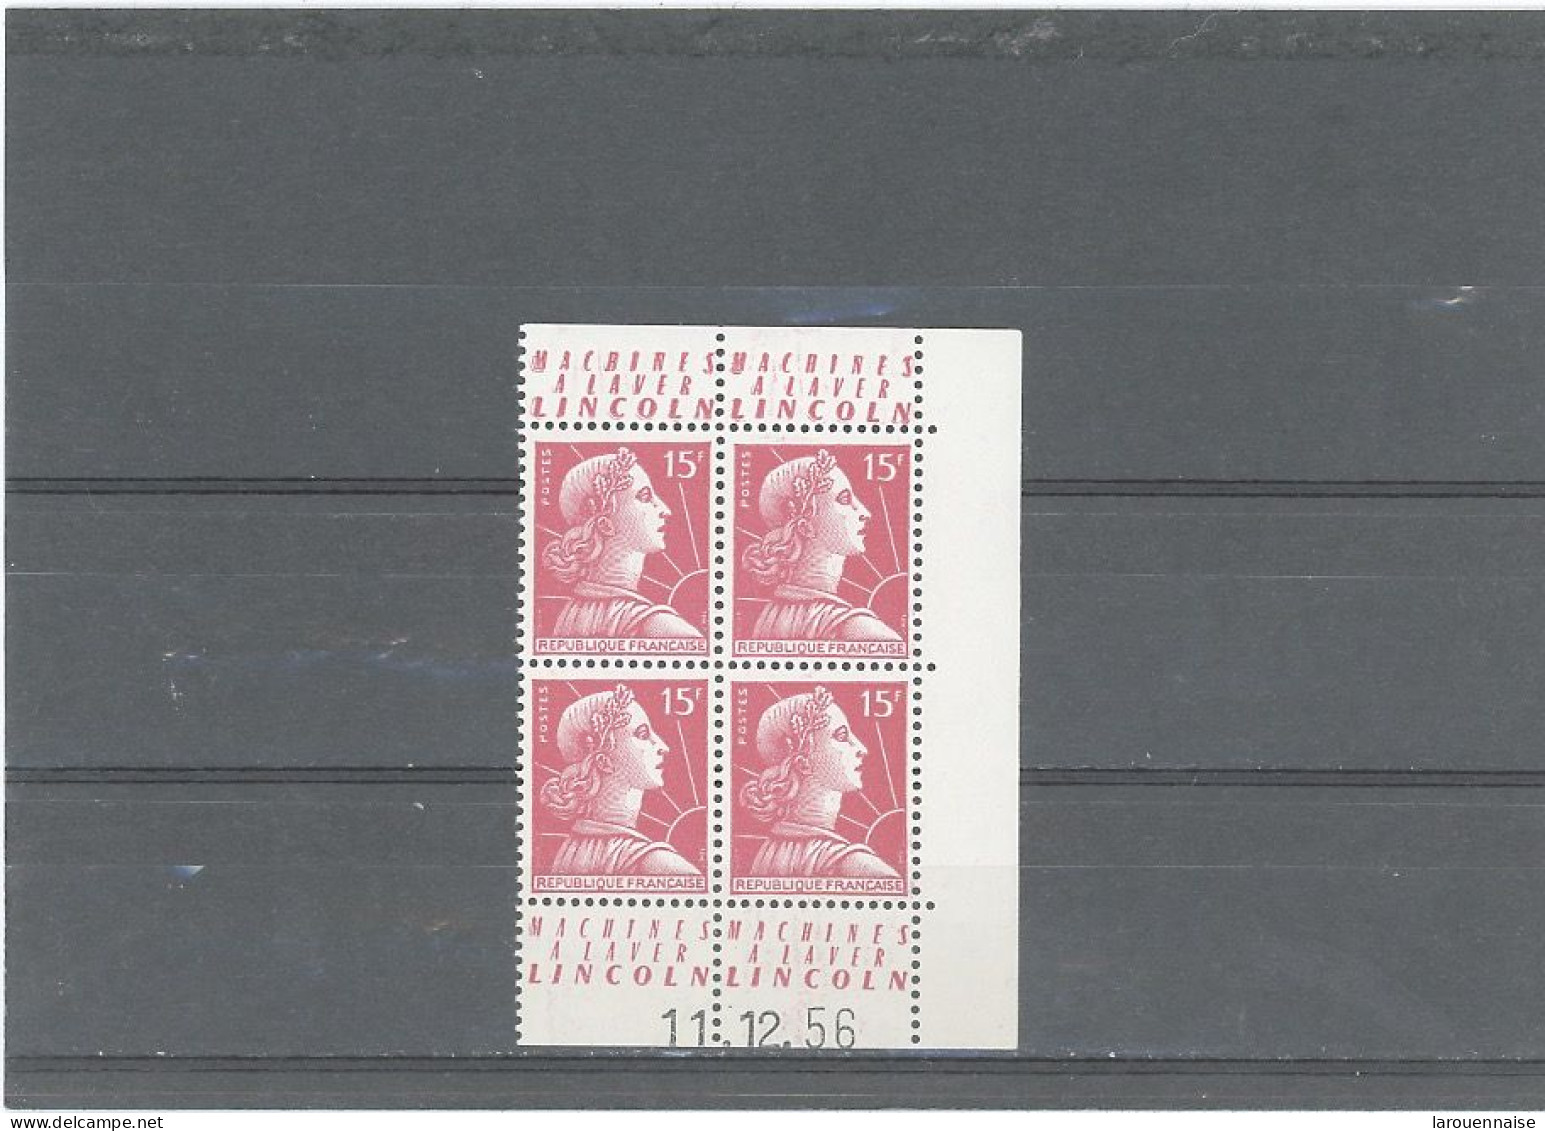 BANDE PUB -N°1011 -TYPE MULLER -15f ROSE  BLOC DE 4 N**PUB -LINCOLN  -DATÉ 11-12-56 -MAURY 282b - Unused Stamps